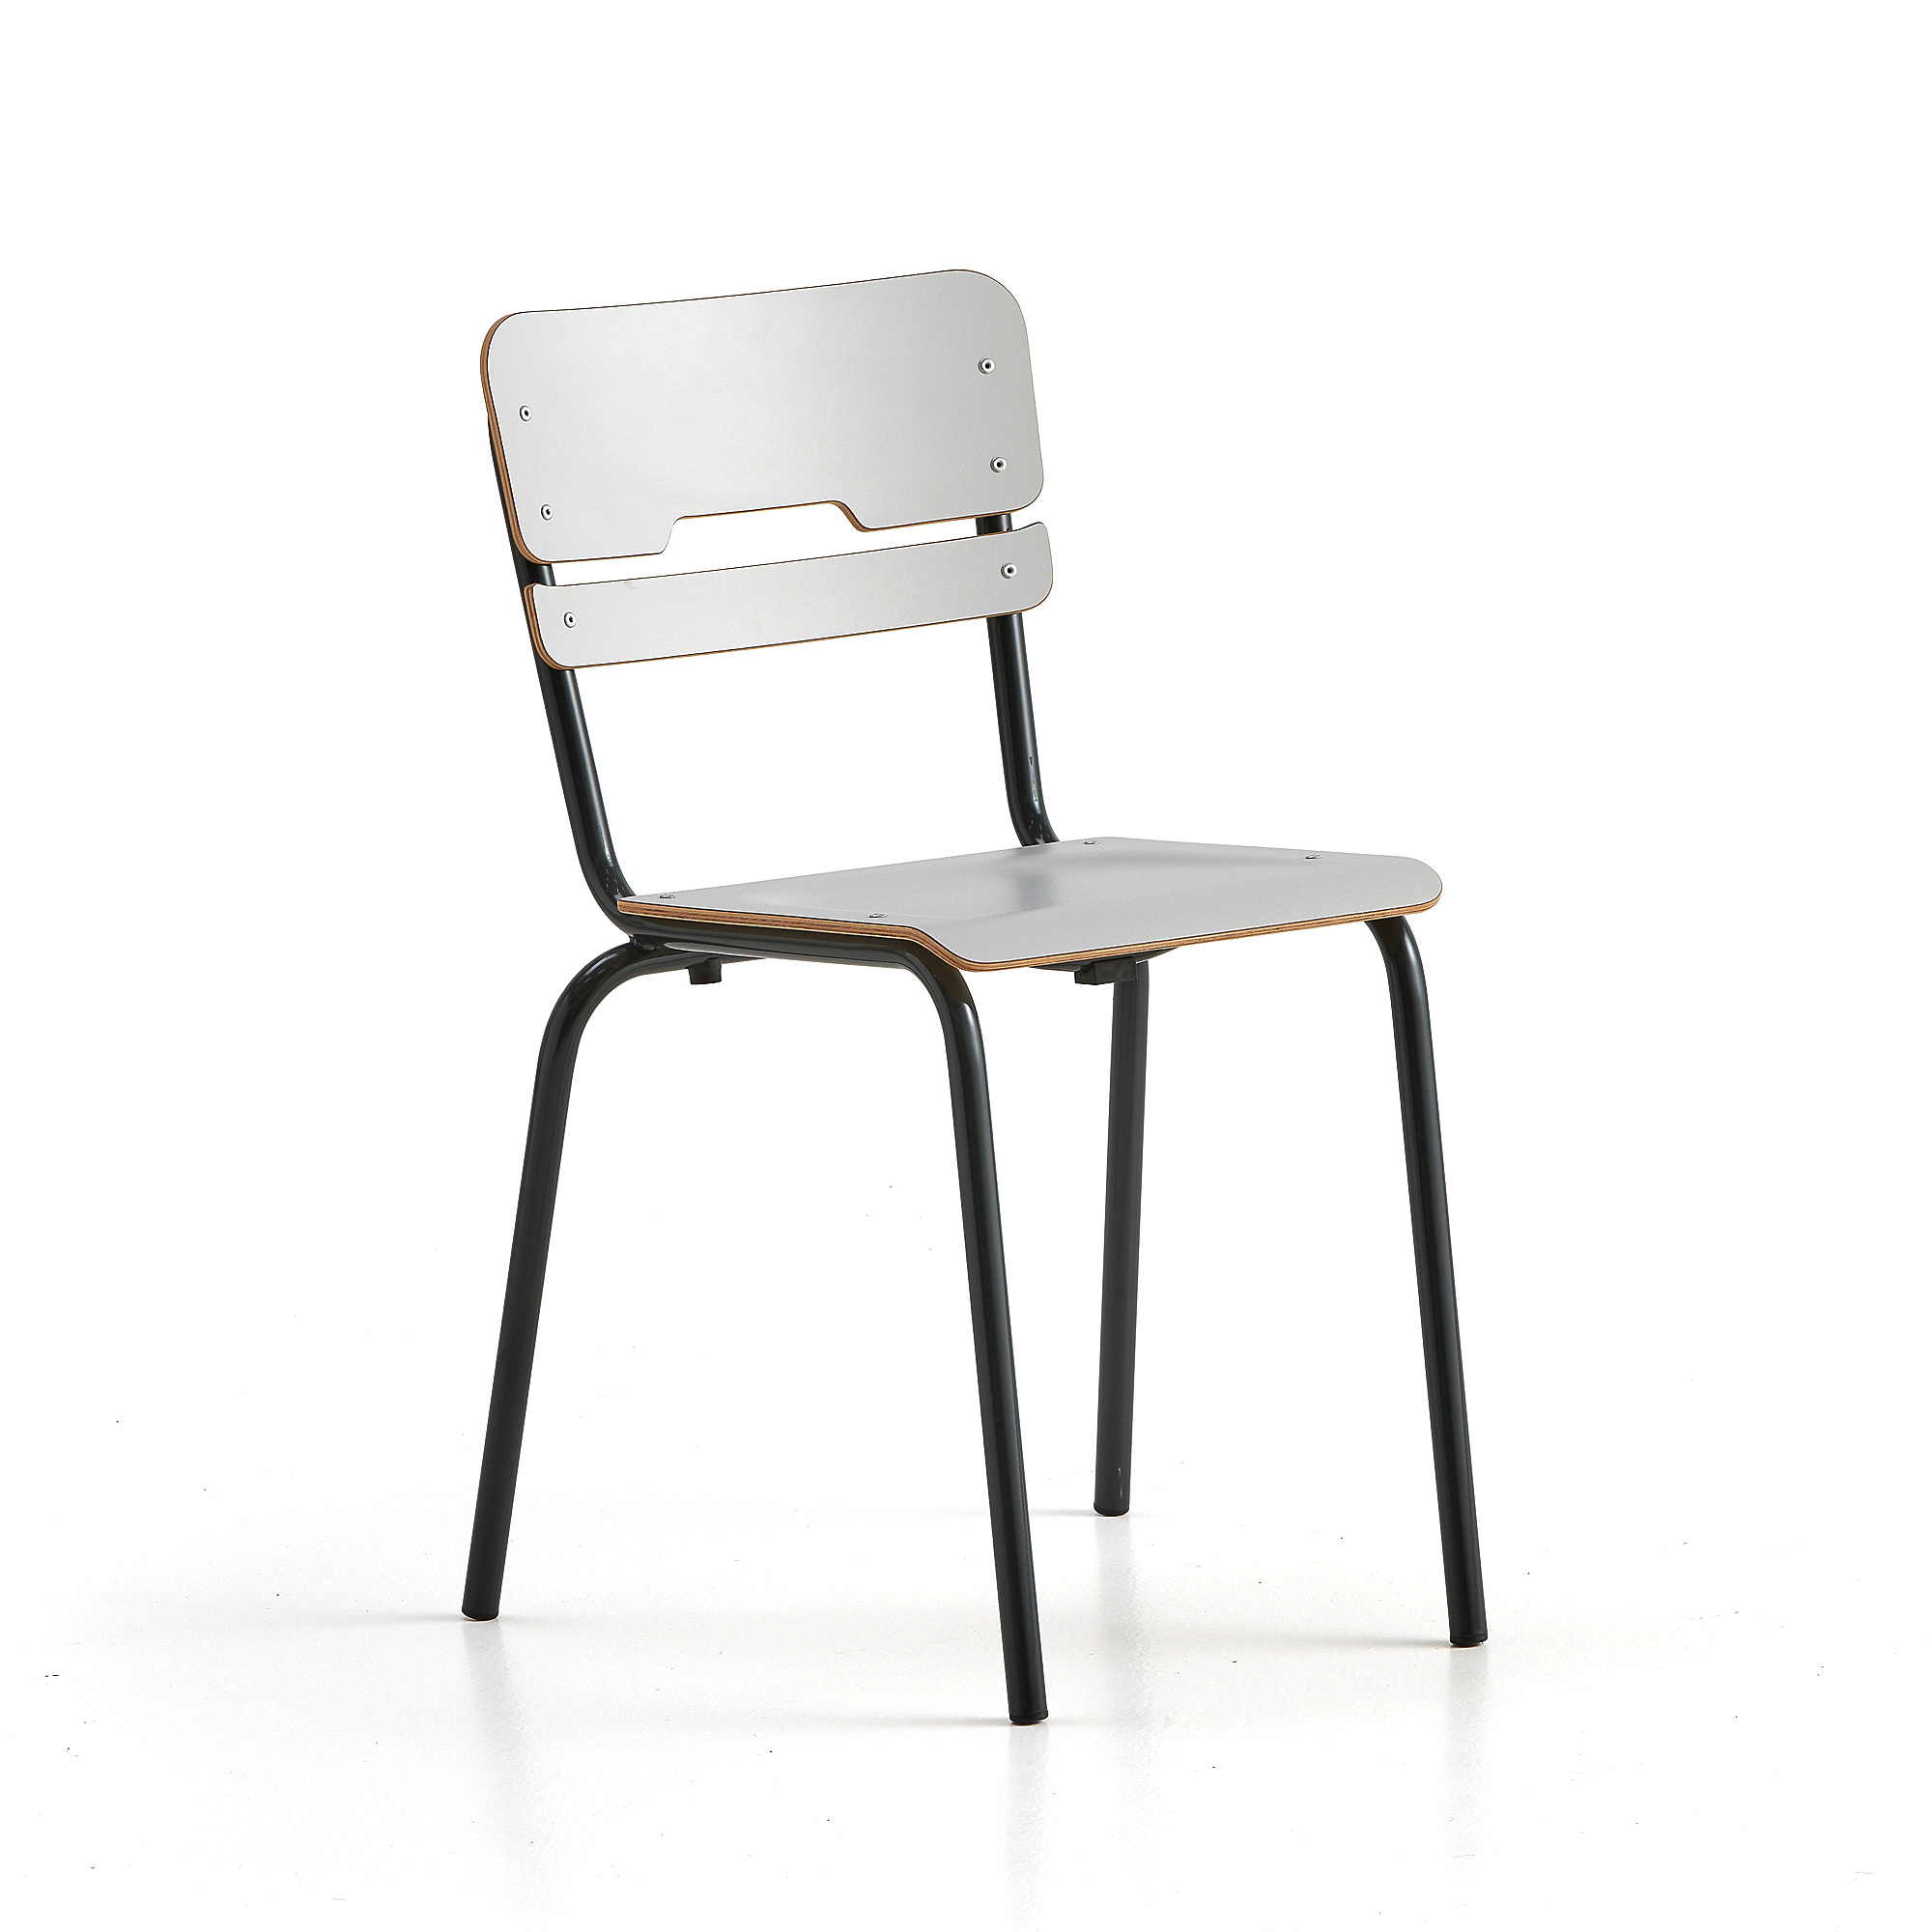 E-shop Školská stolička SCIENTIA, nízke sedadlo, V 460 mm, antracit/šedá